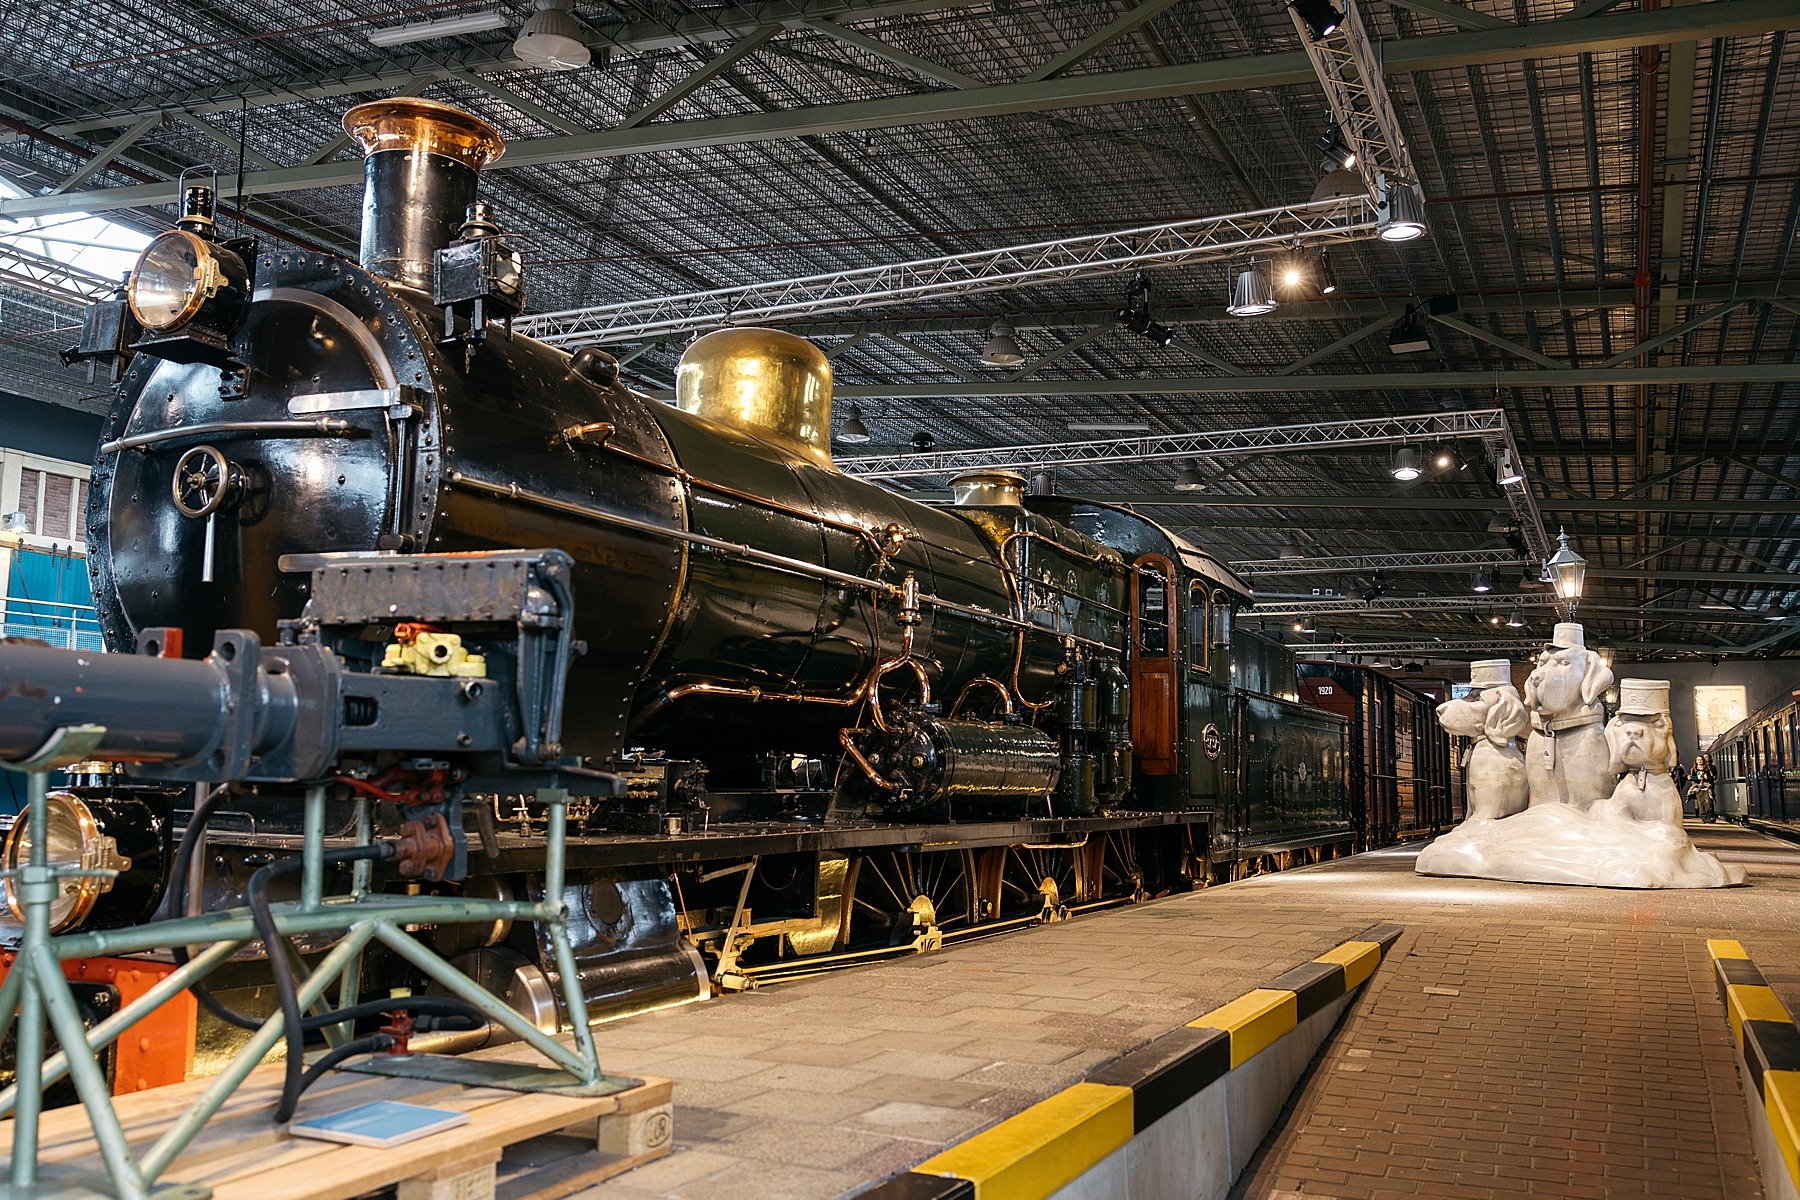 Spoorwegmuseum, l'incroyable musée du train de Utrecht 109